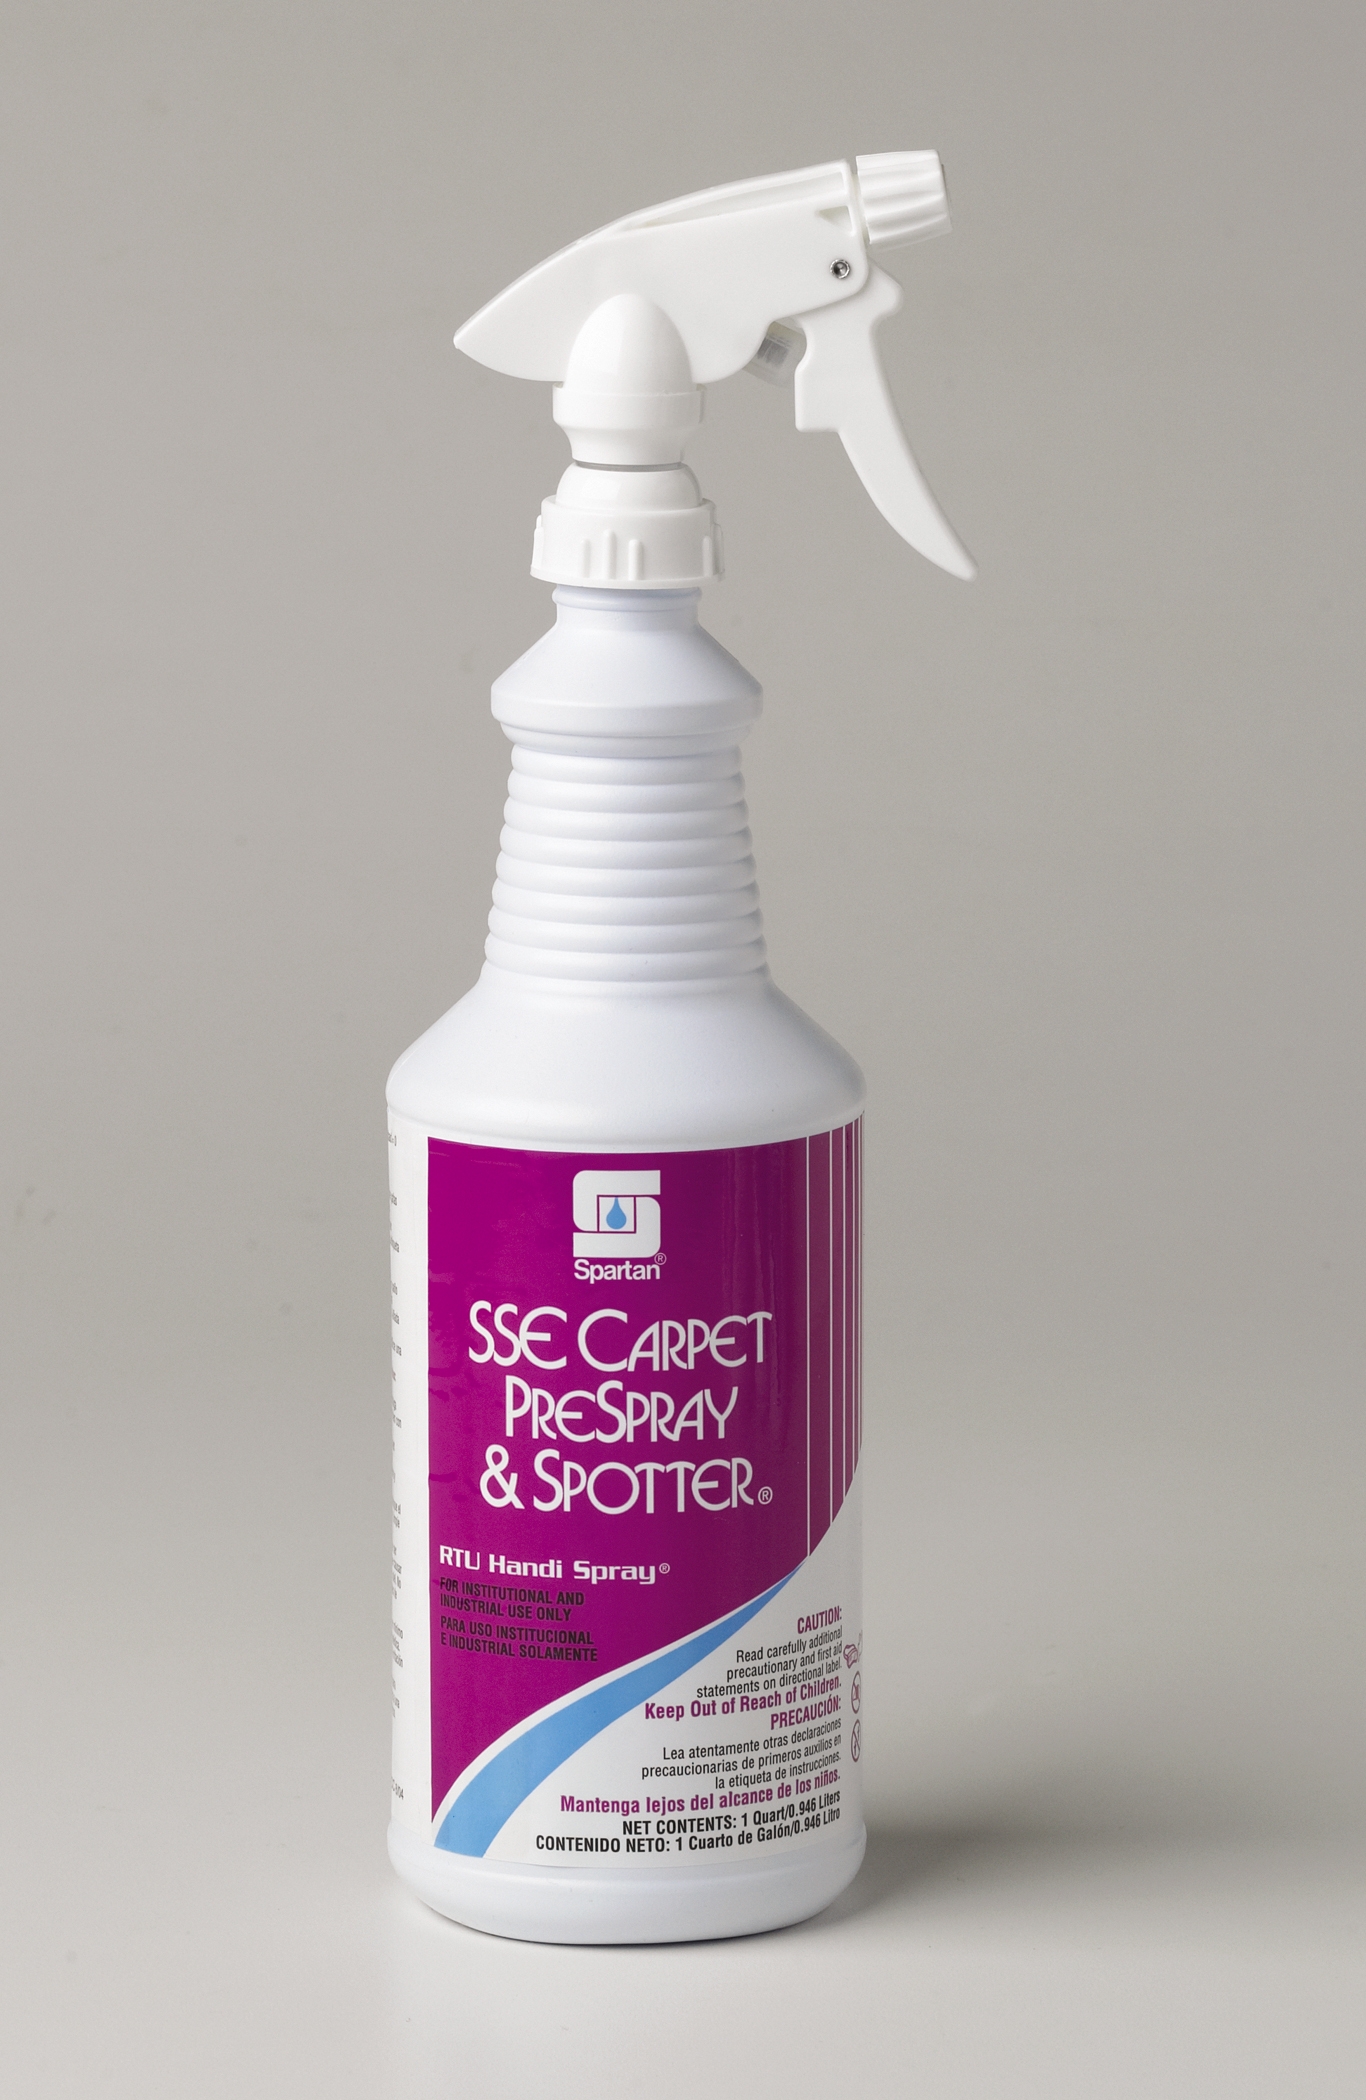 SSE carpet pre-spray and spotter detergent for high performance carpet maintenance